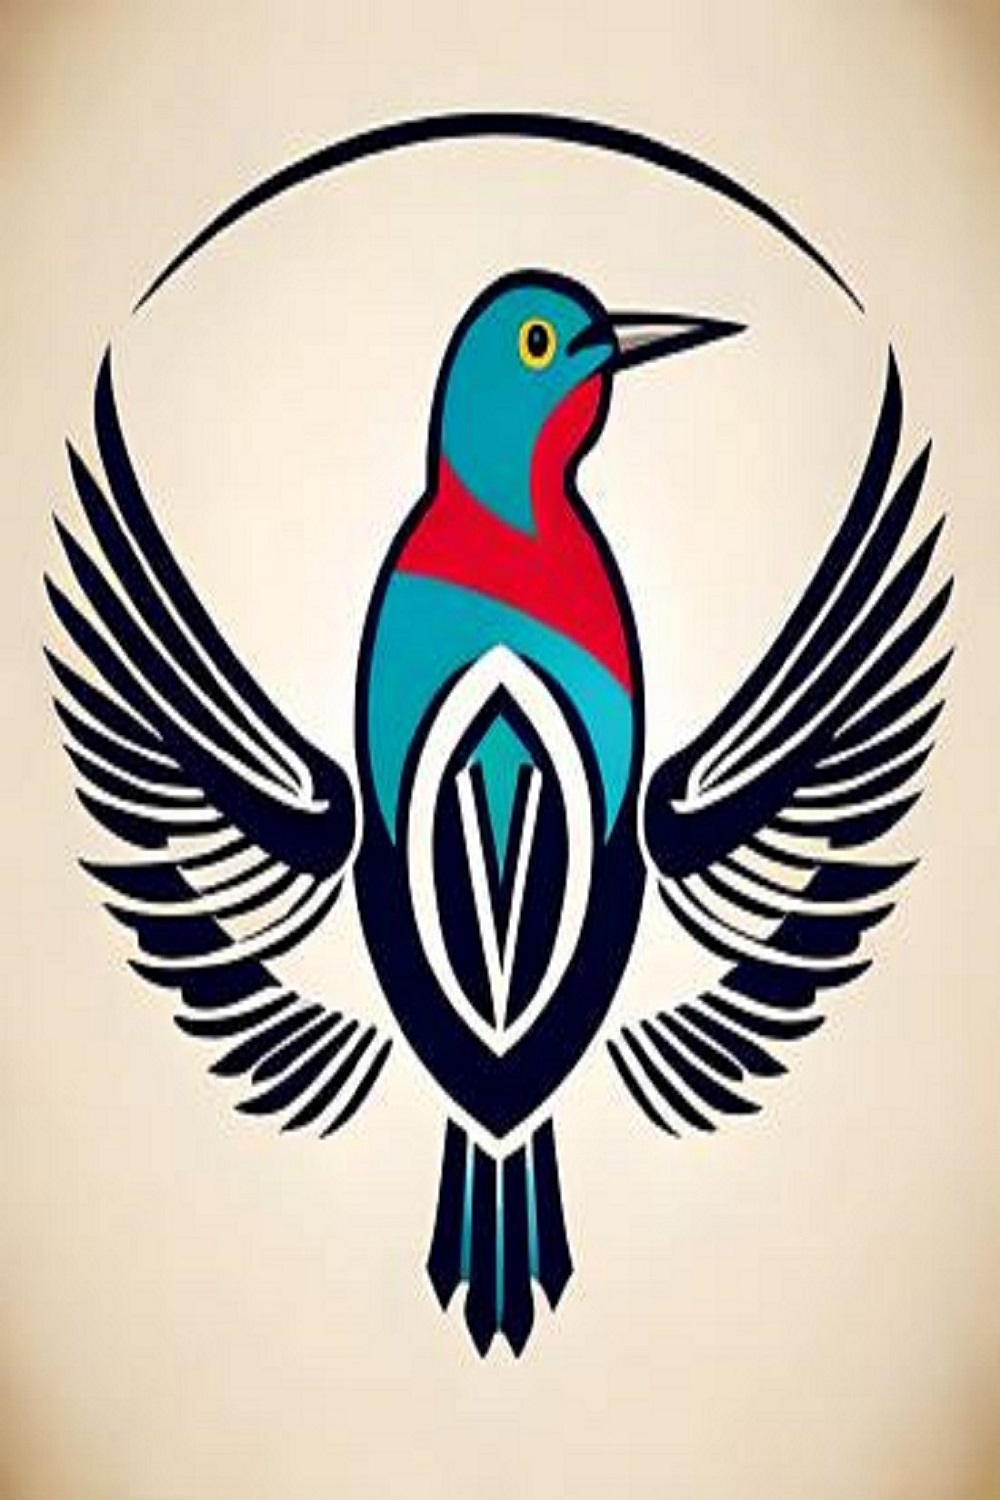 Bird Flying logo pinterest preview image.